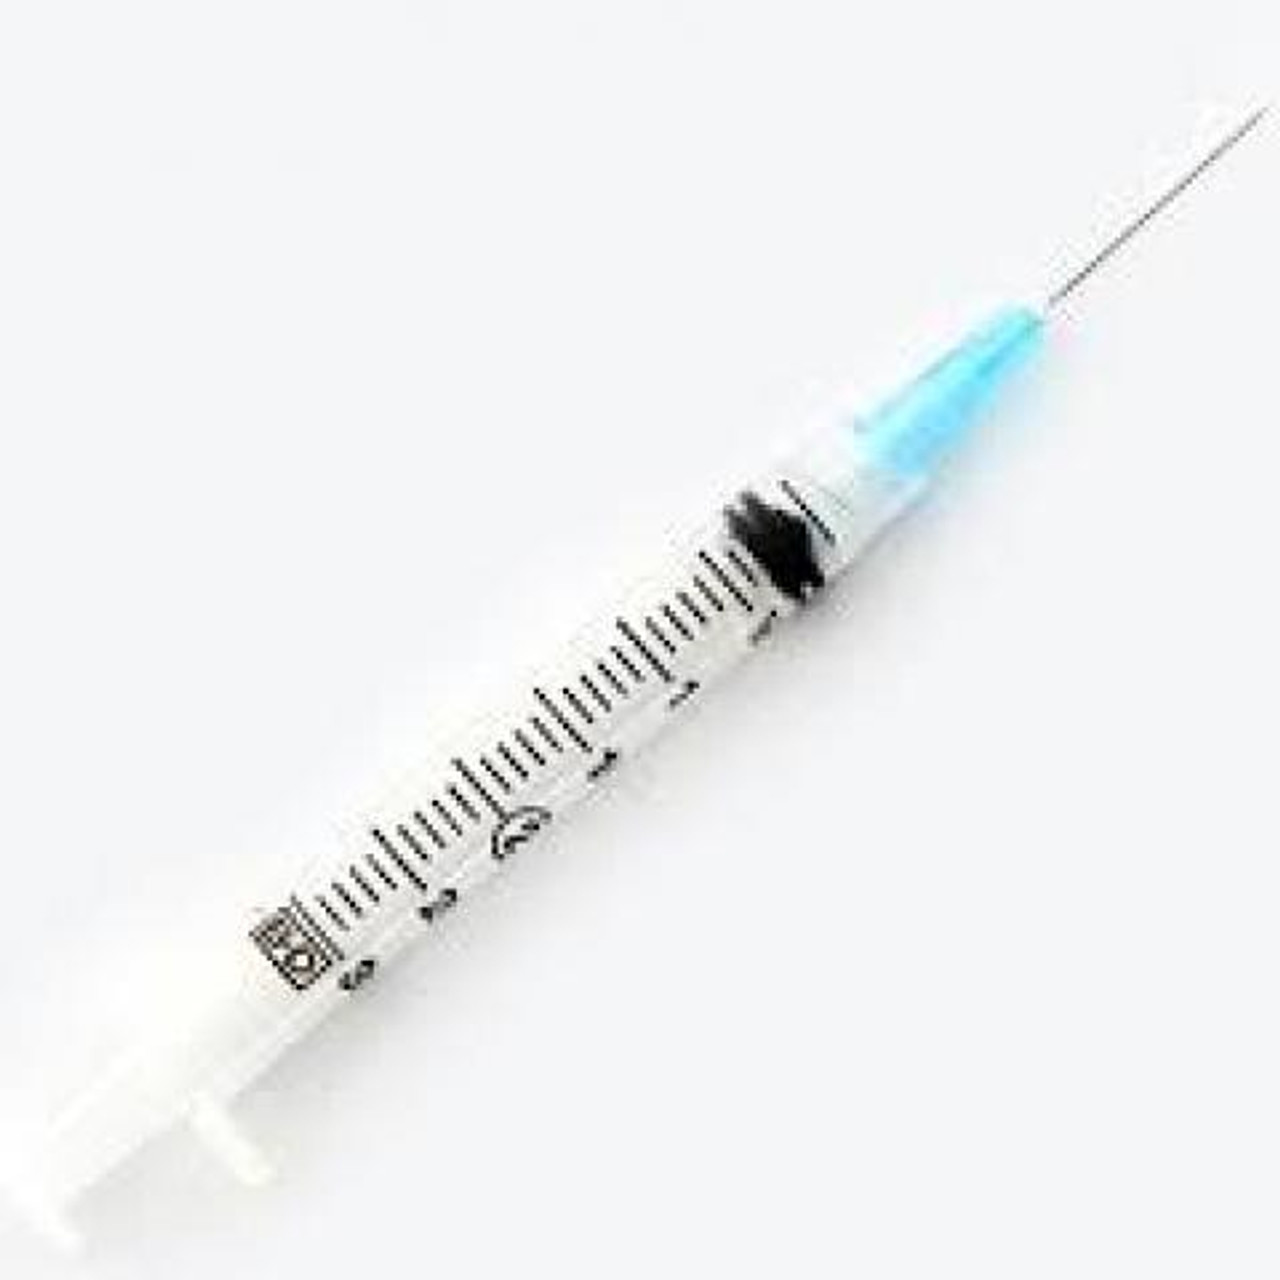 BD 309635 Luer-Lok syringe BD PrecisionGlide needle 5cc 20 G x1.5"